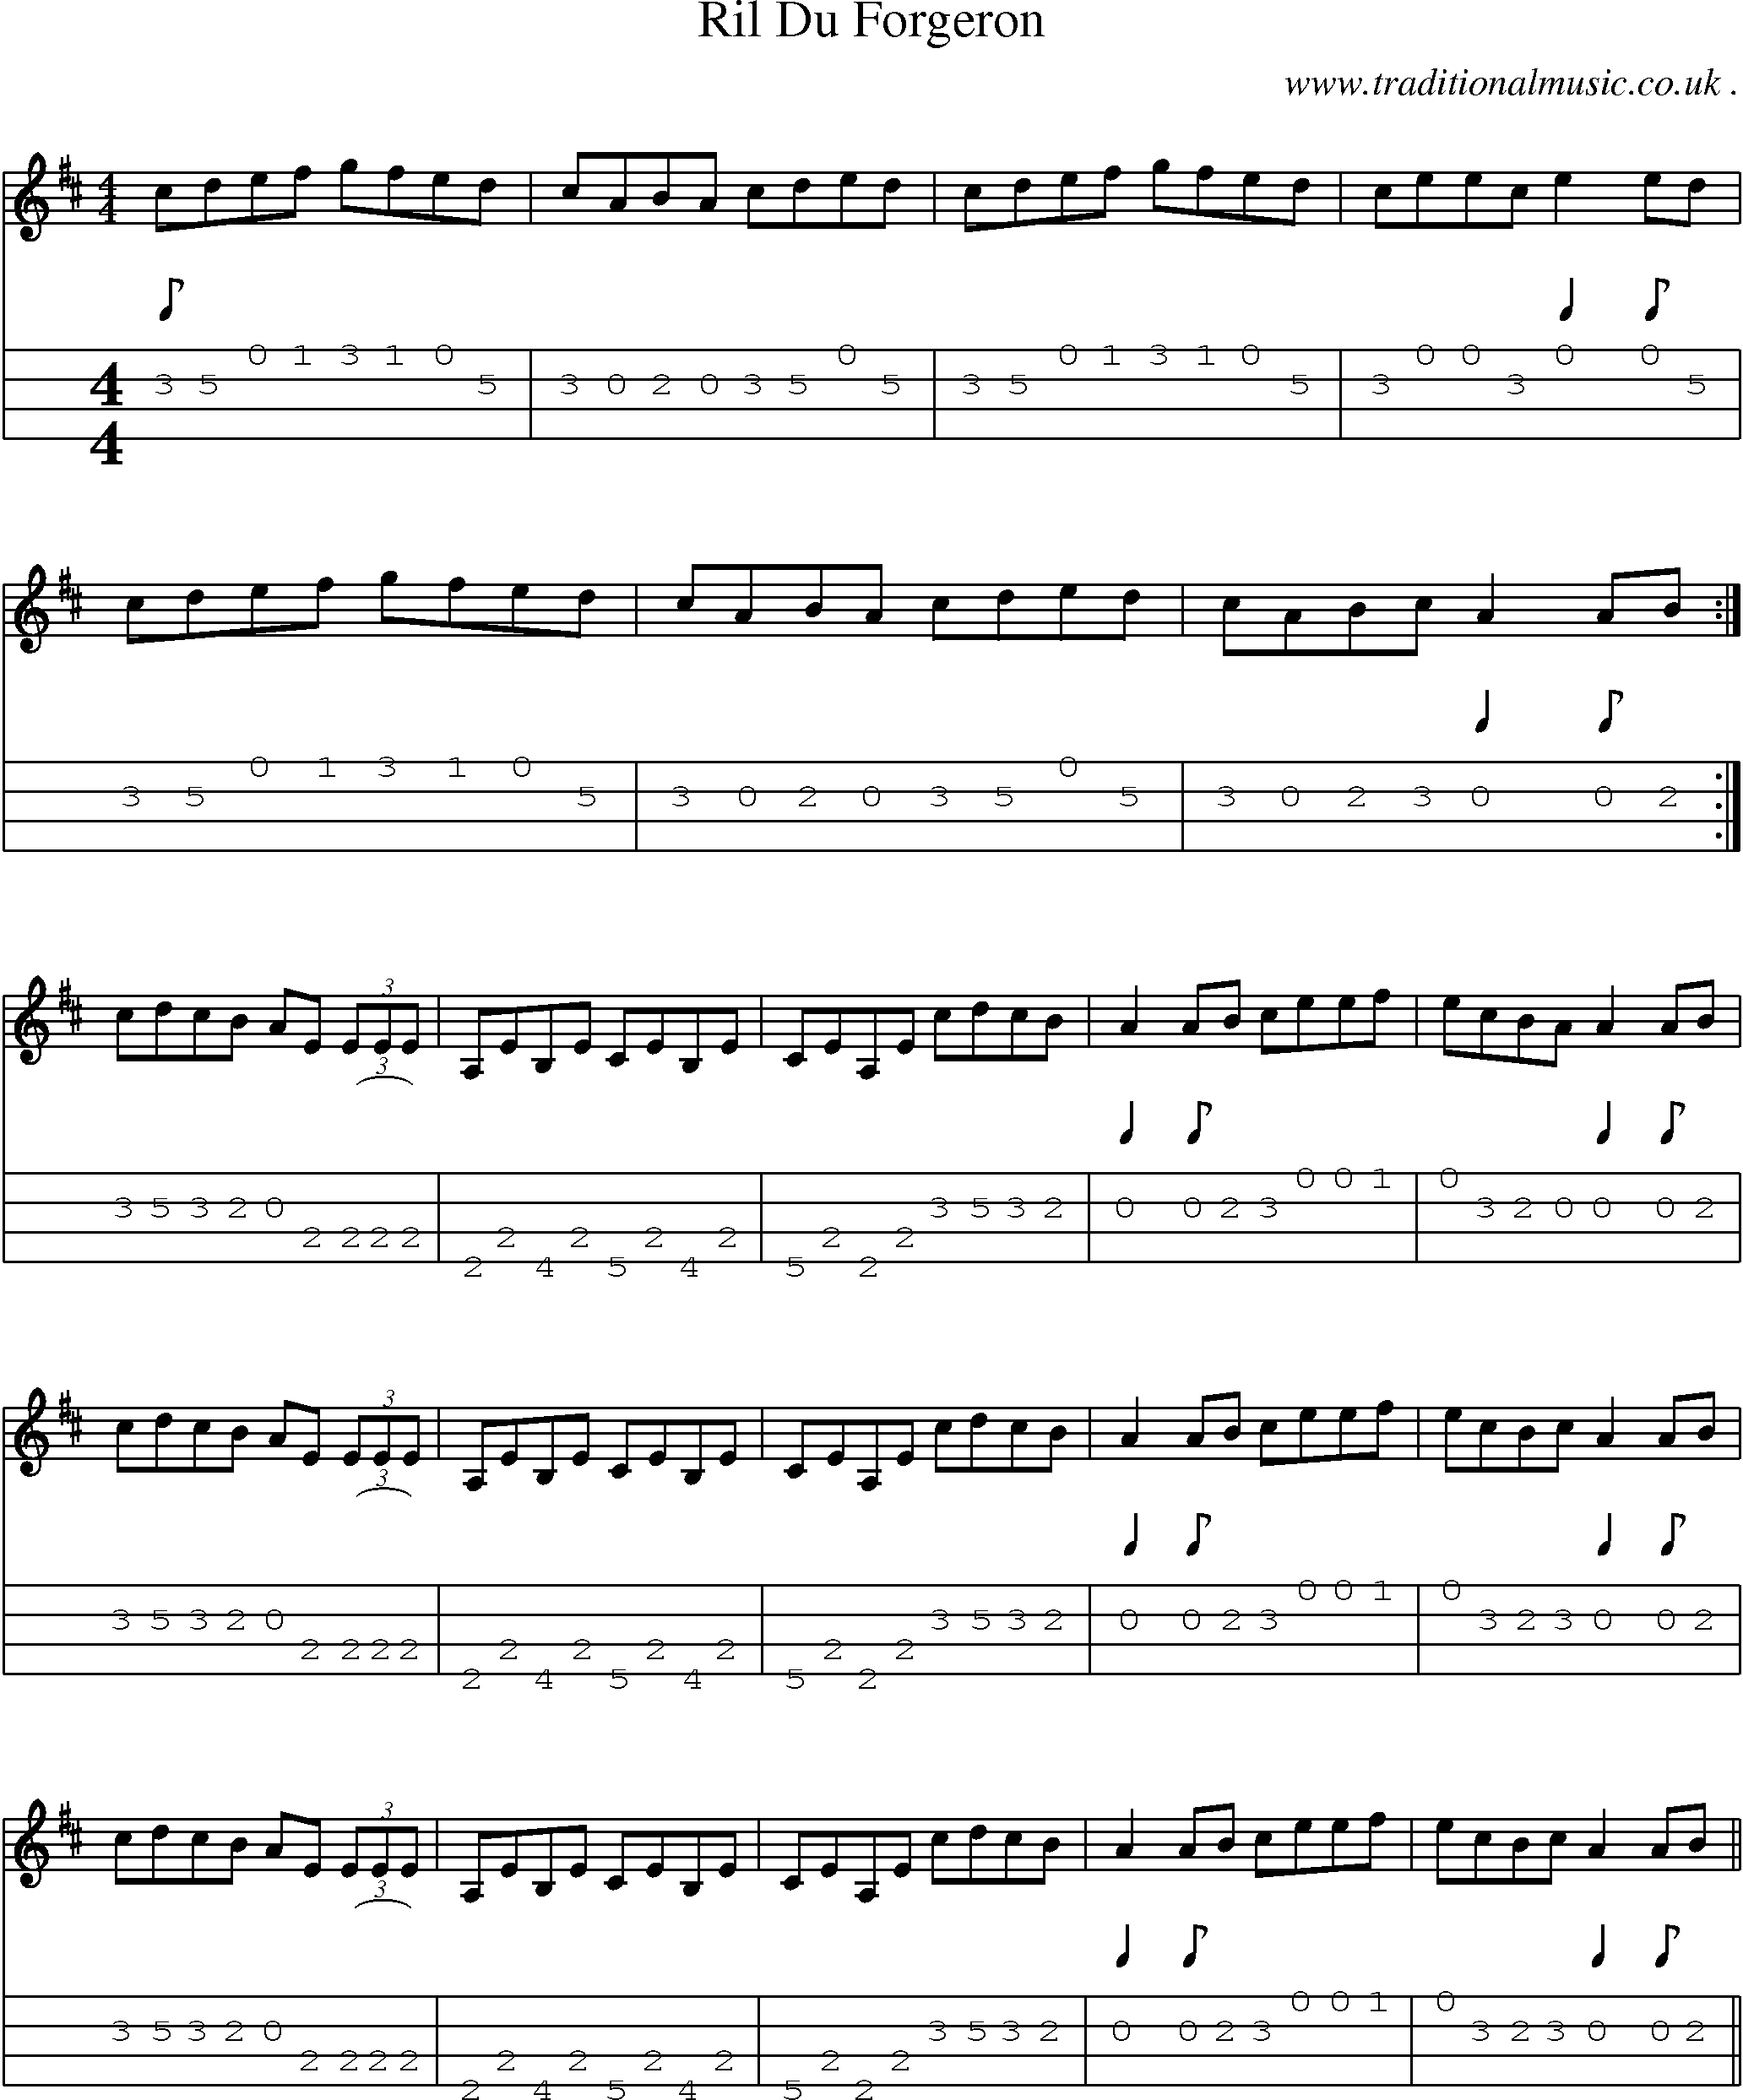 Sheet-Music and Mandolin Tabs for Ril Du Forgeron